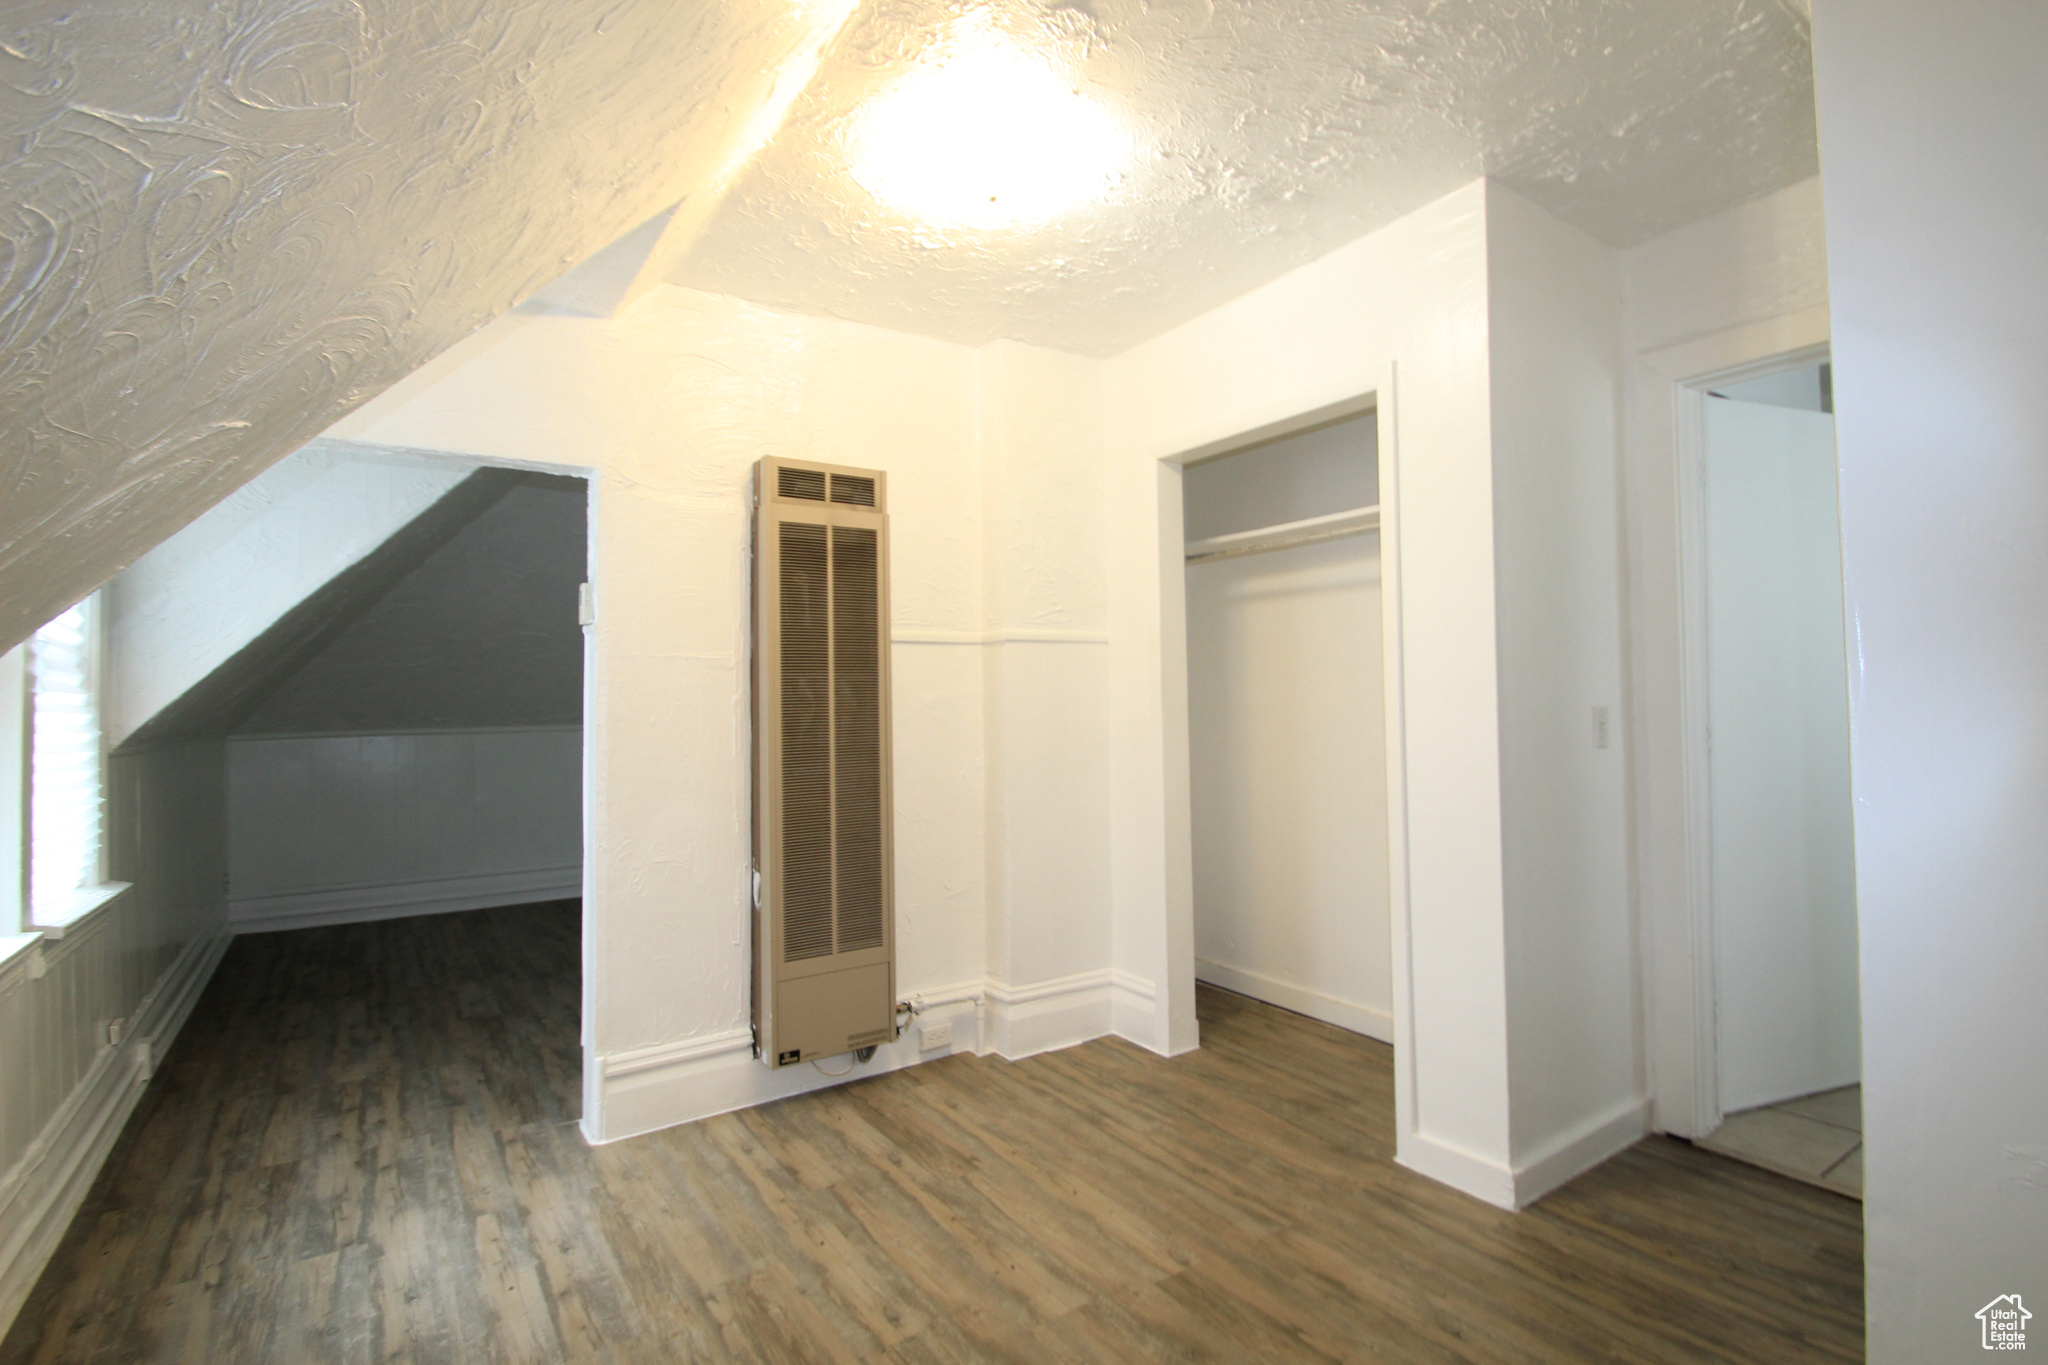 Bonus room with dark hardwood / wood-style flooring and a textured ceiling